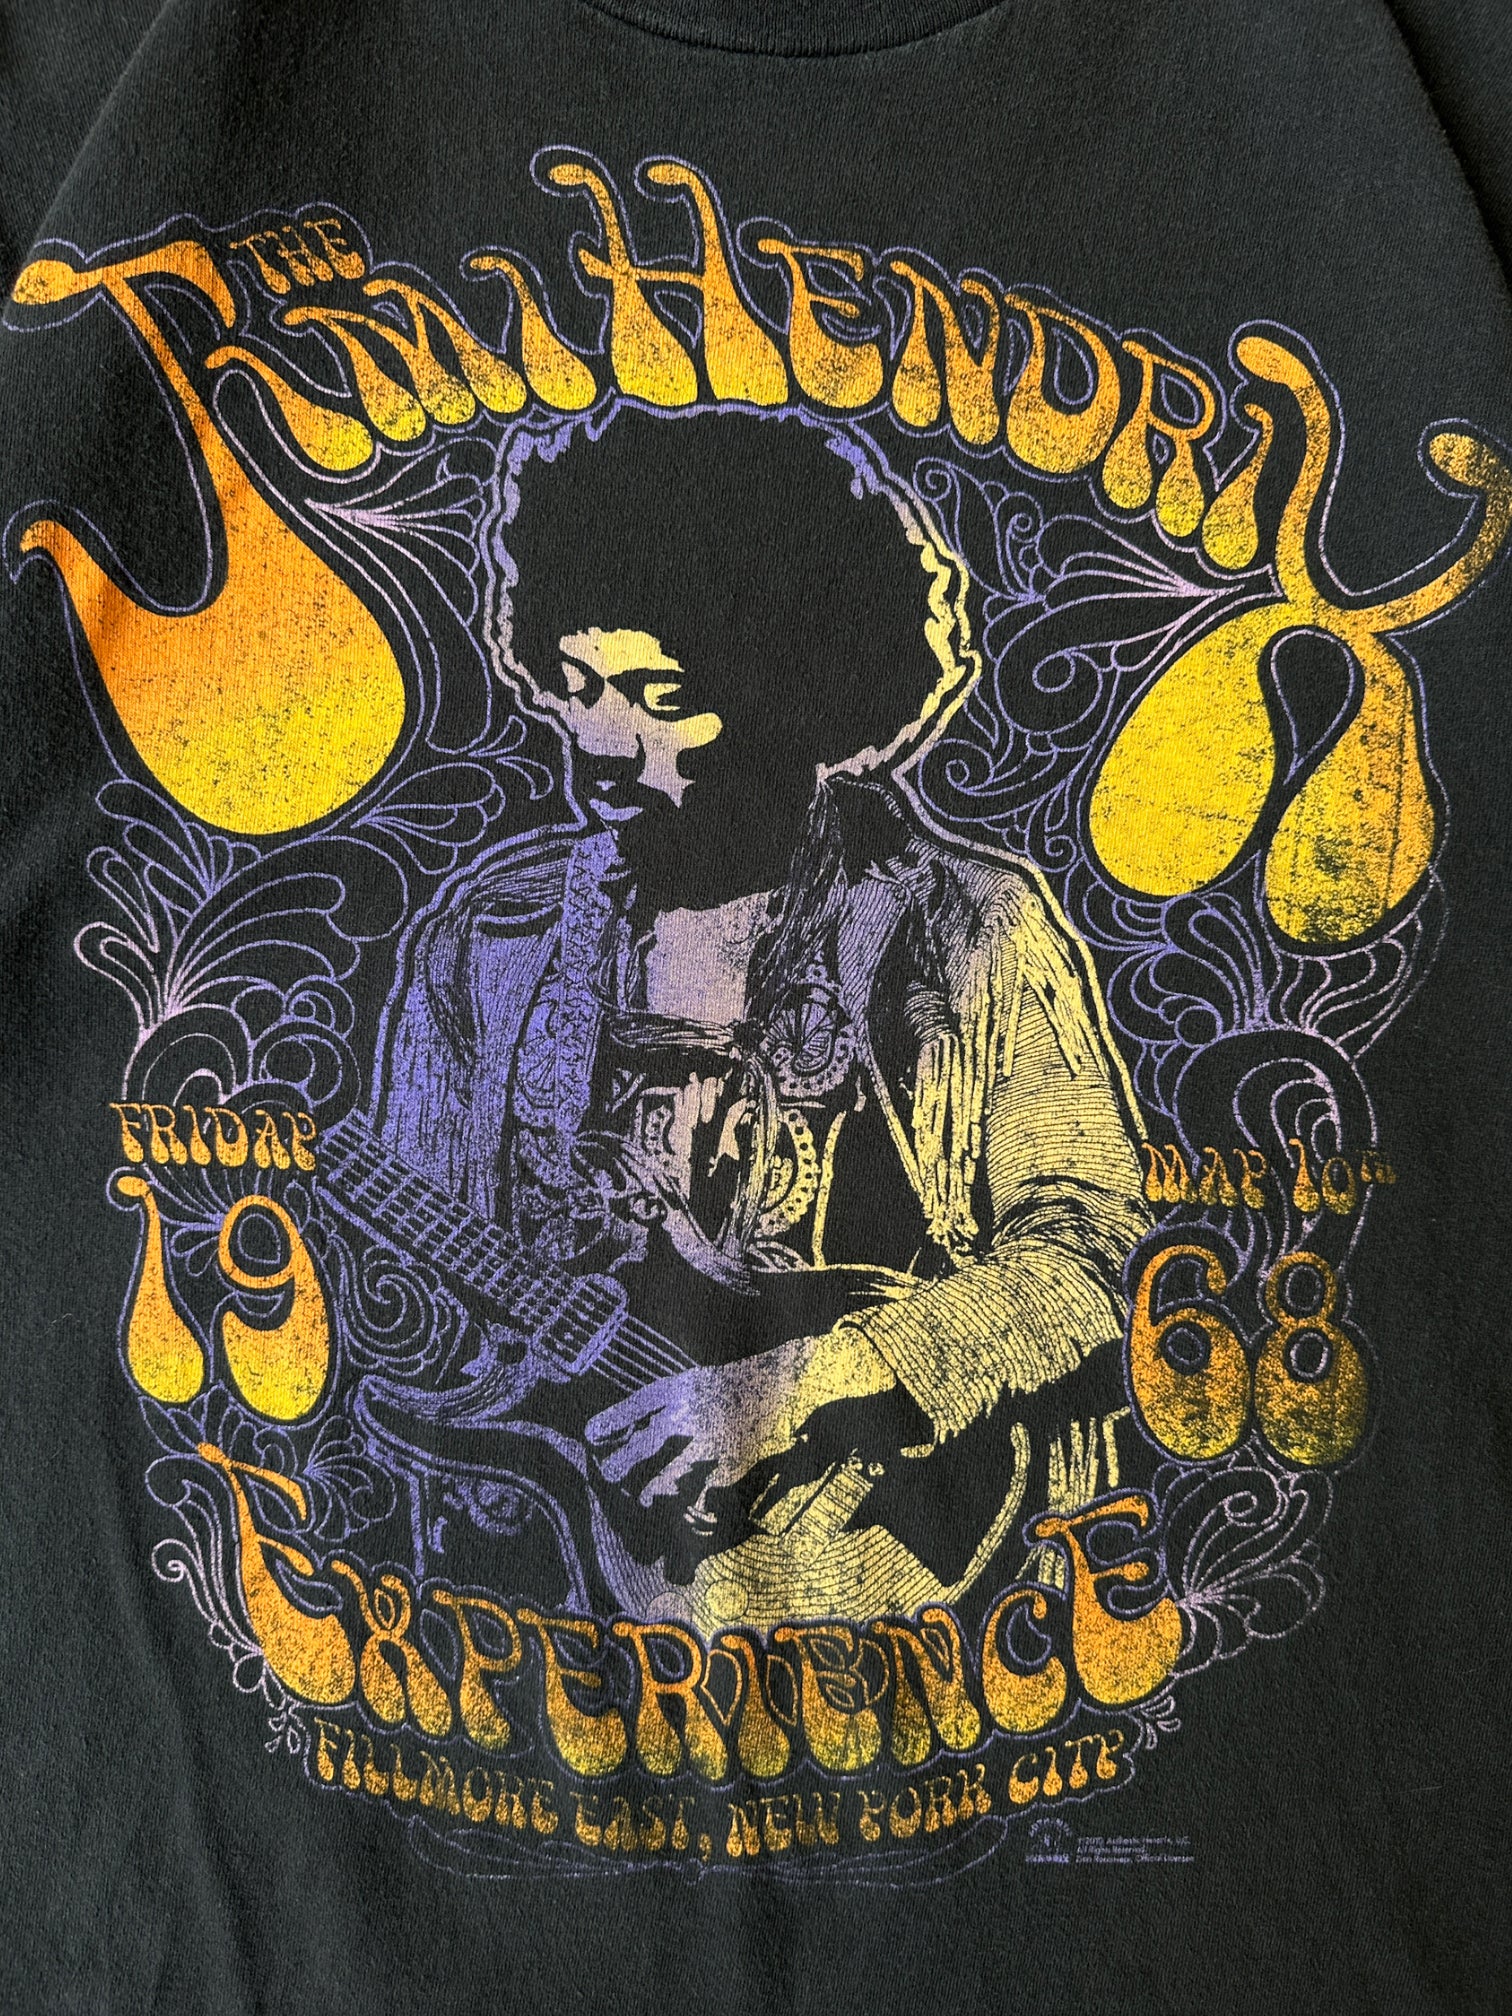 Vintage Jimmy Hendrix Experience T-Shirt - Medium